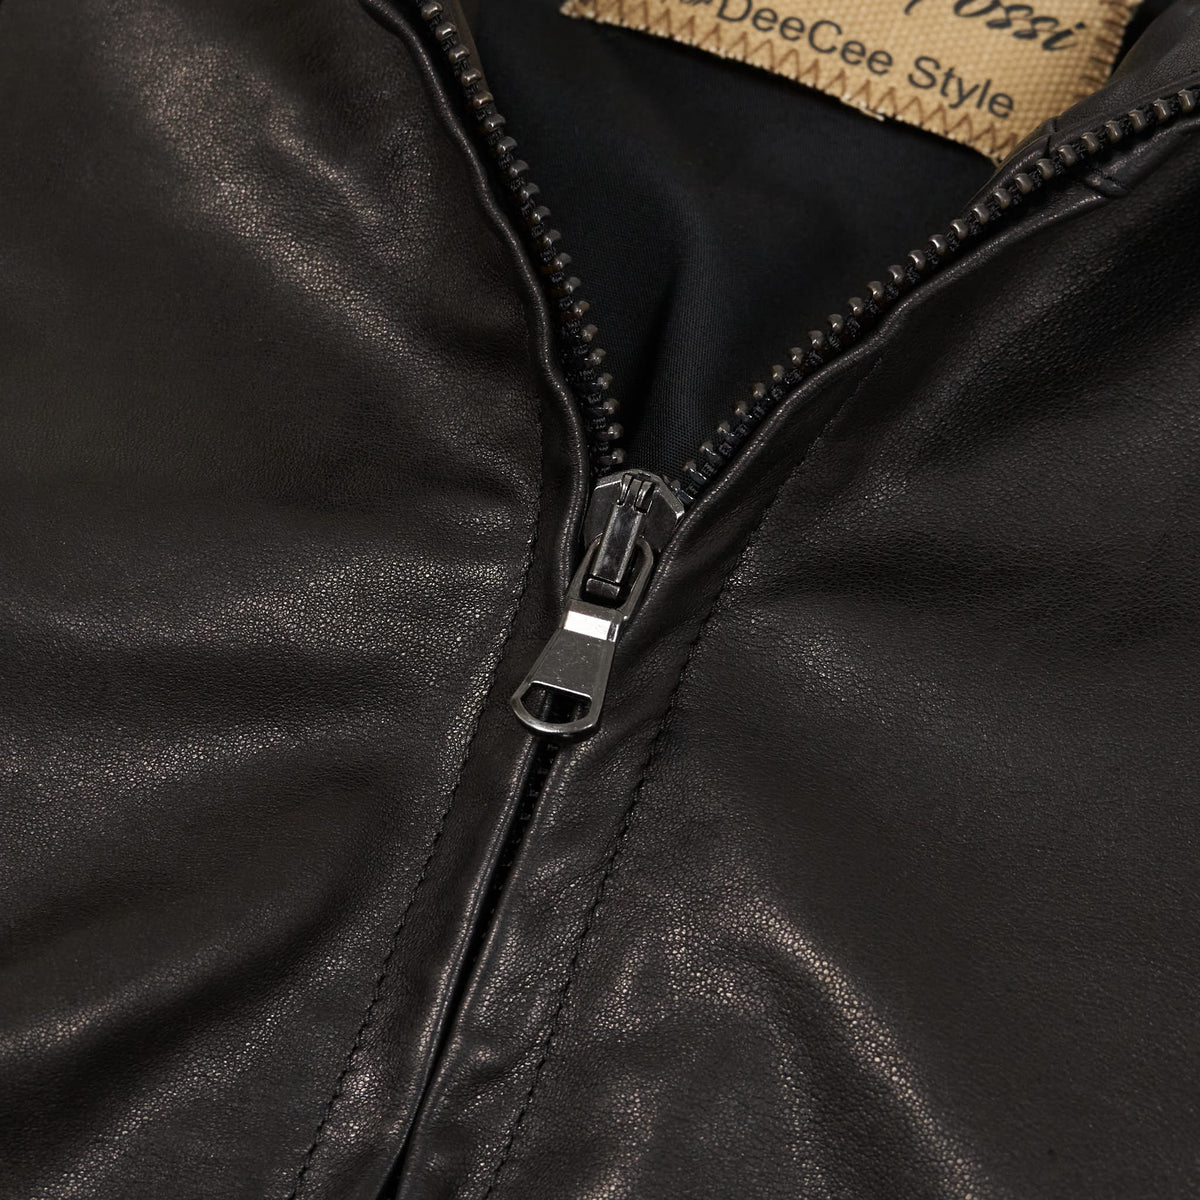 DeeCee style Ladies Leather Jacket